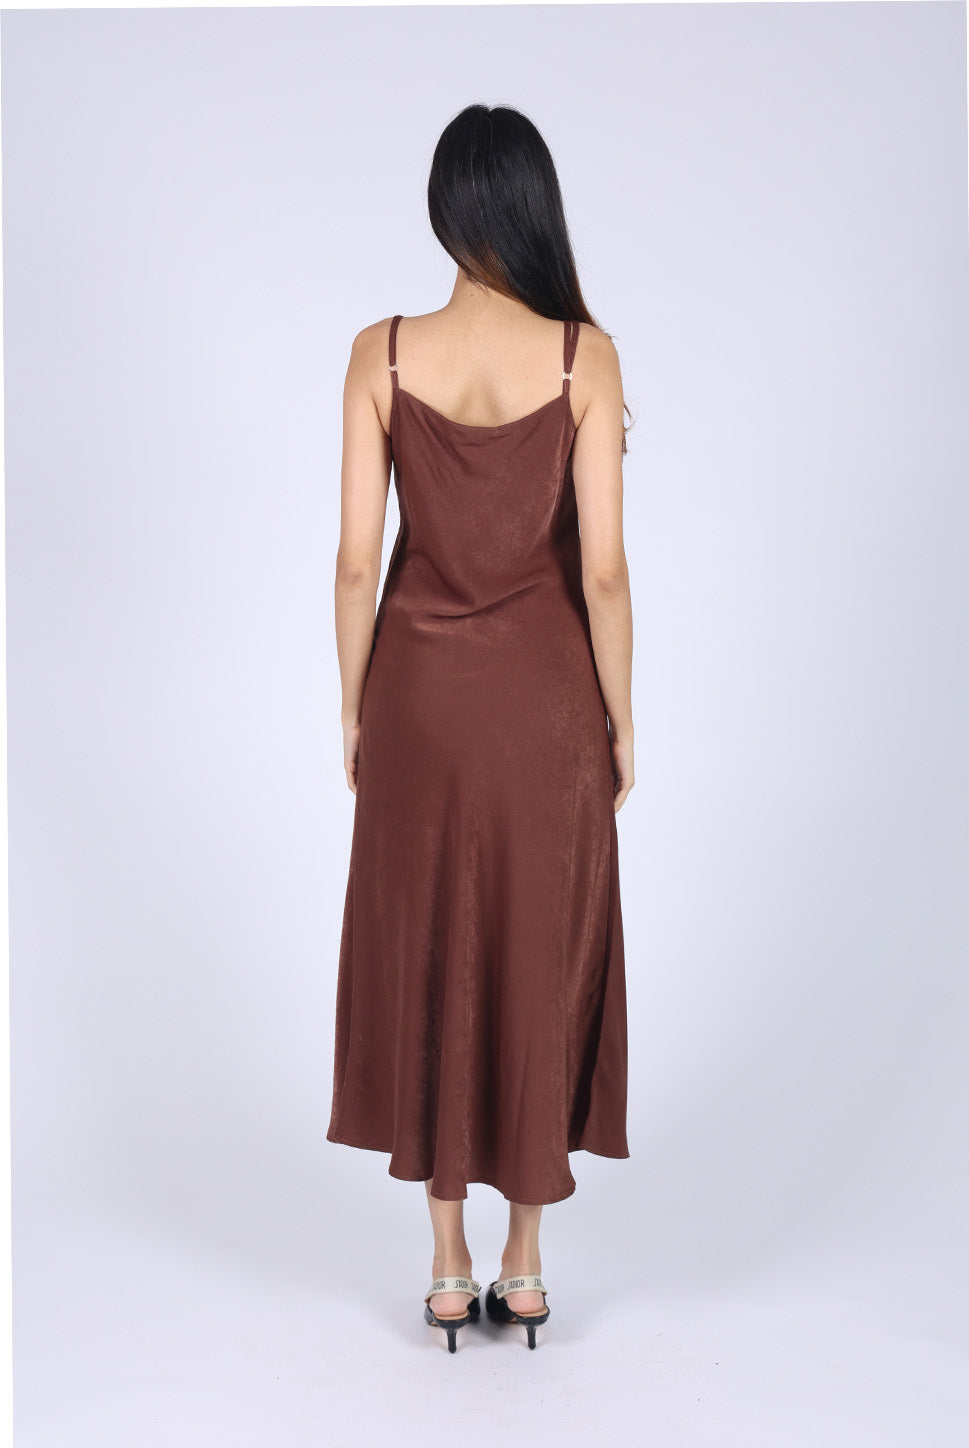 Brown Satin Slip Dress